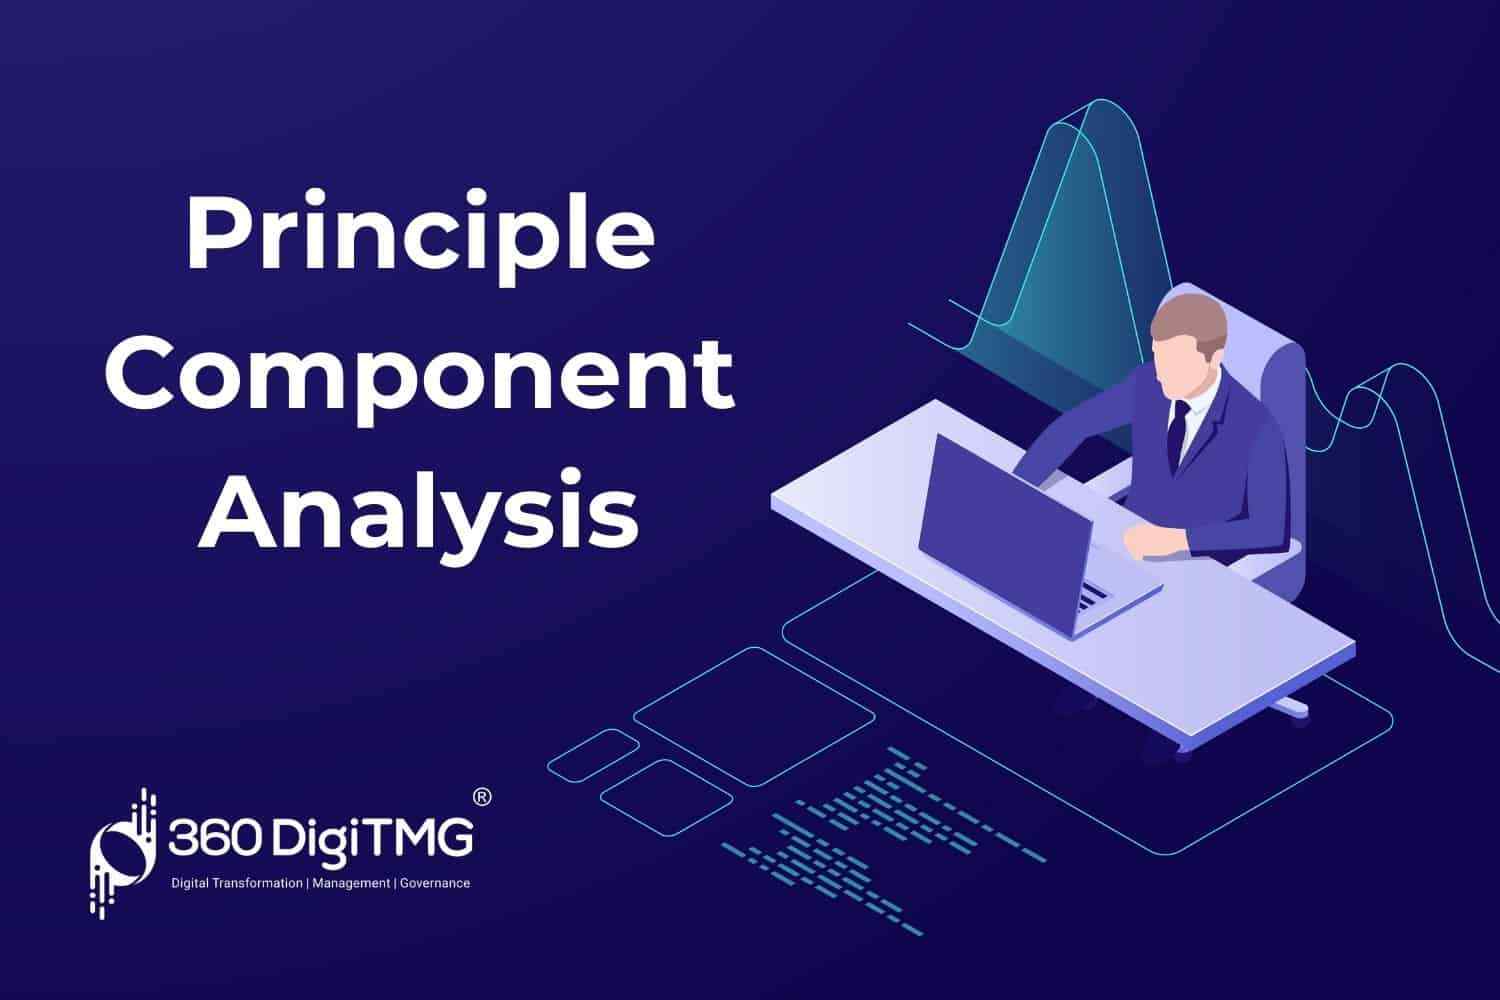 Principle Component Analysis